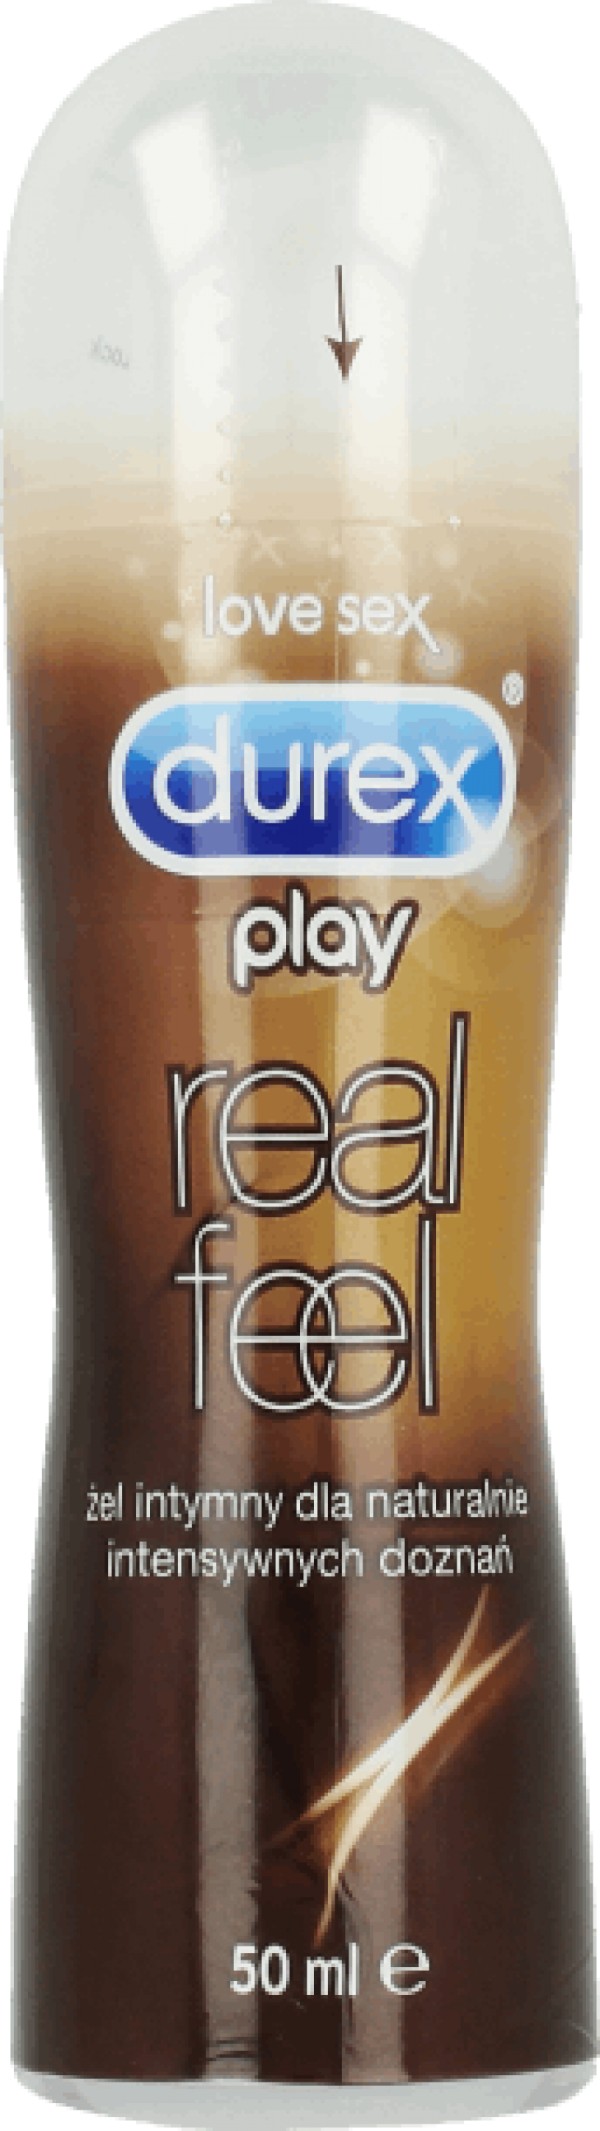 Durex Play Real …